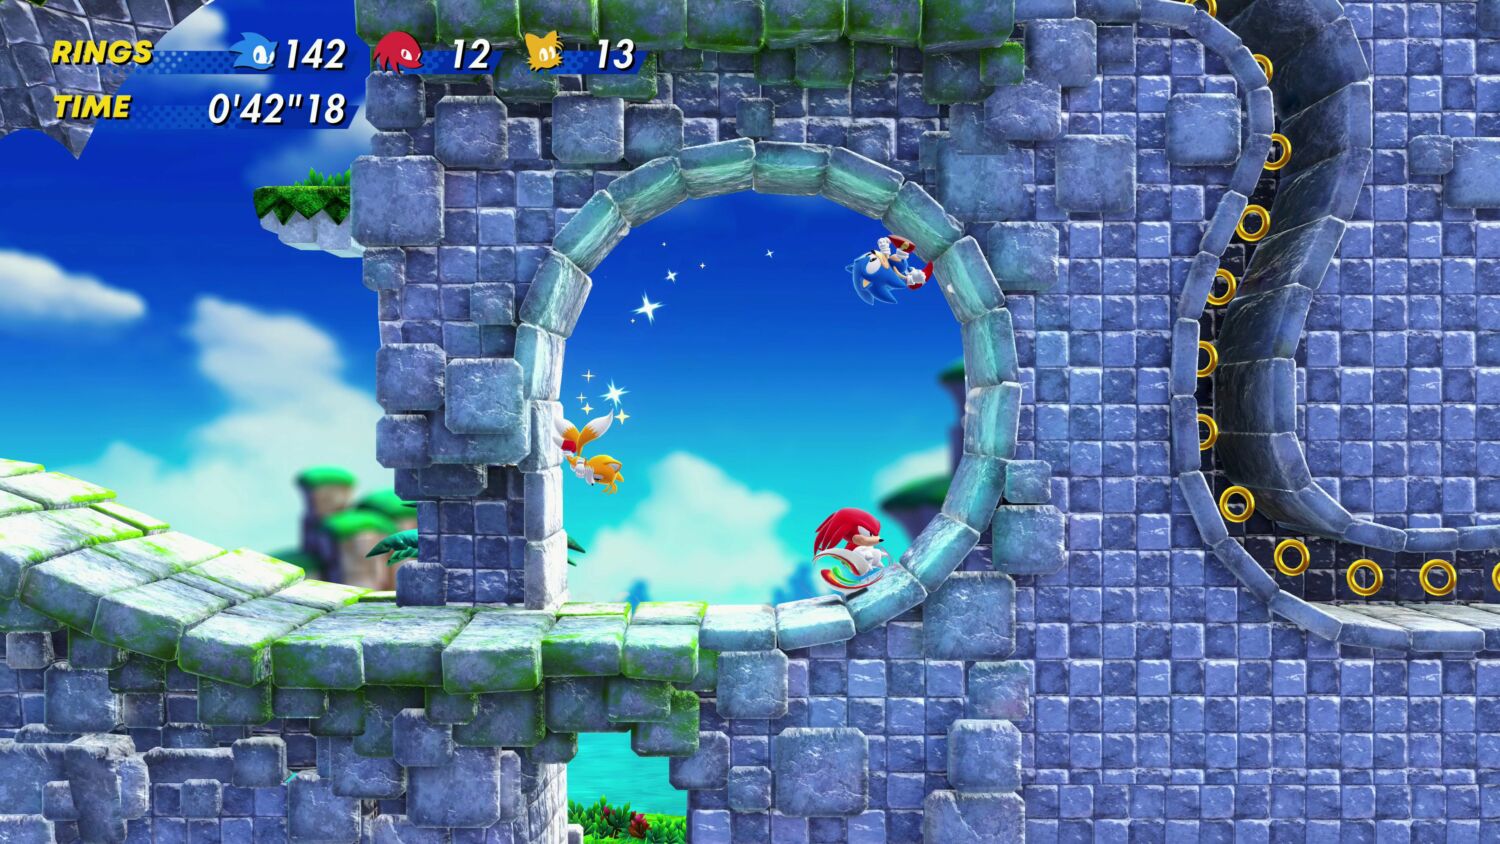 Sonic Superstars sales impacted by Mario, Sega suggests